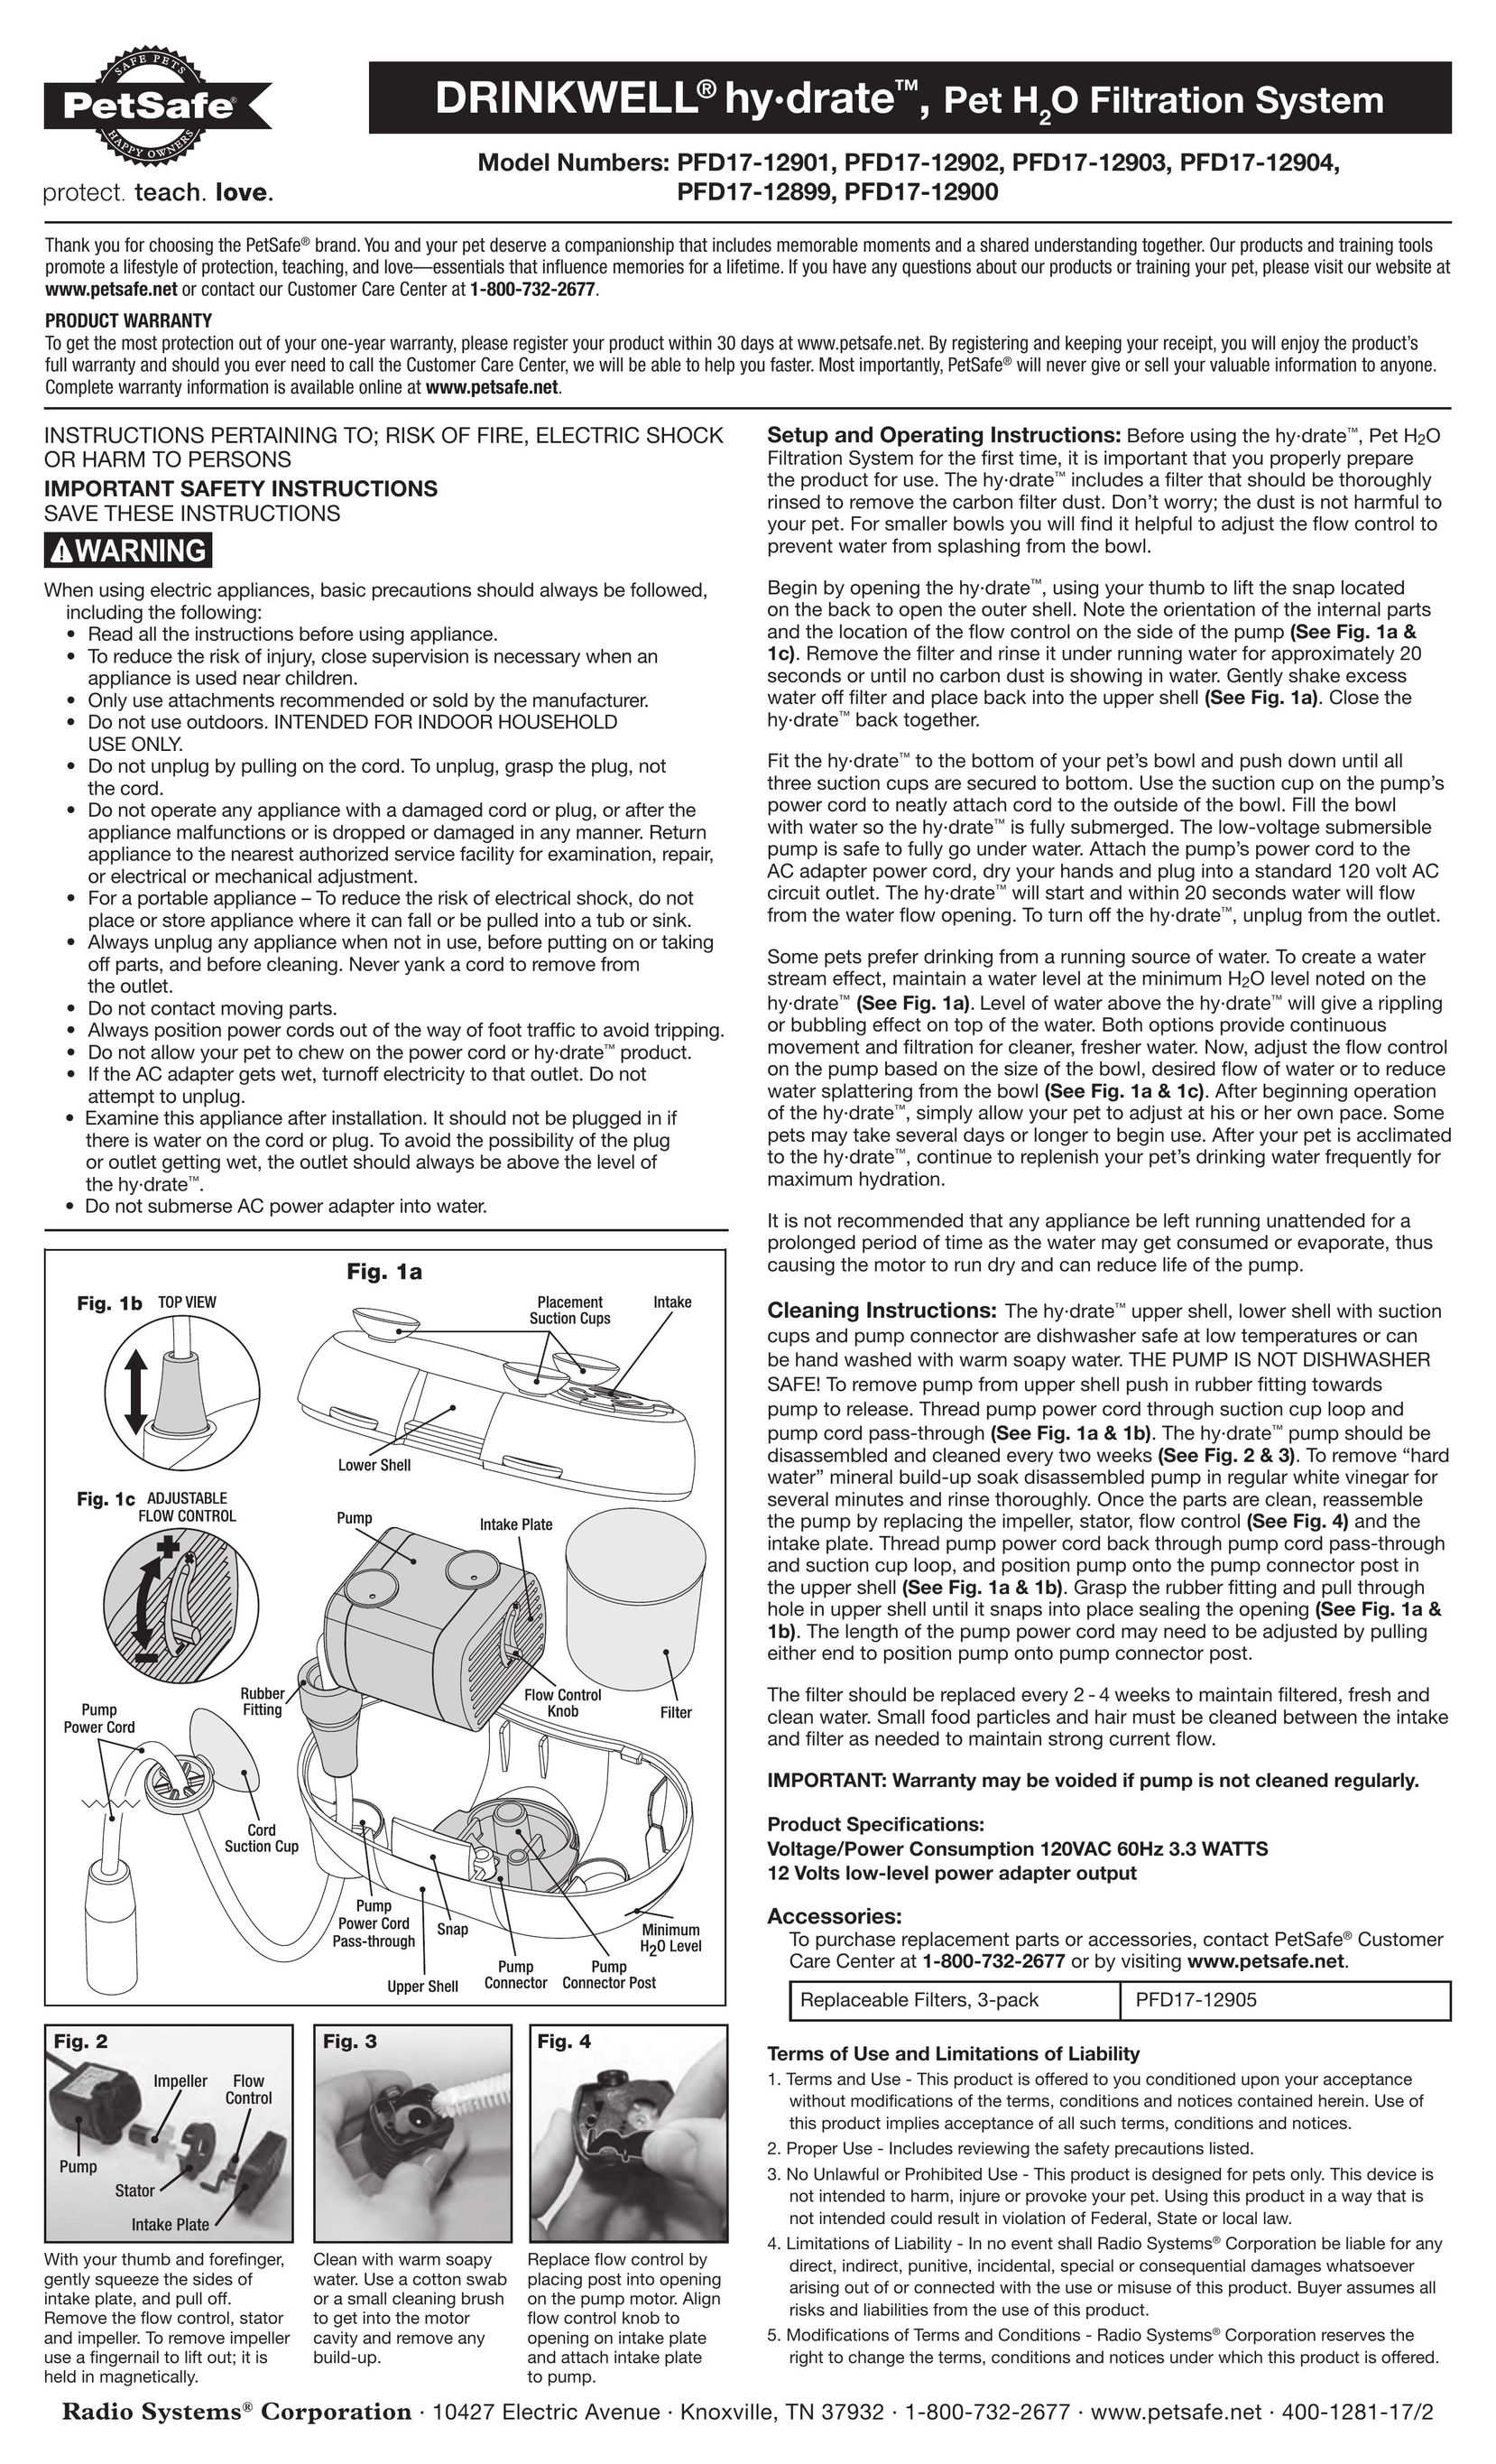 Petsafe PFD17-12900 Water System User Manual